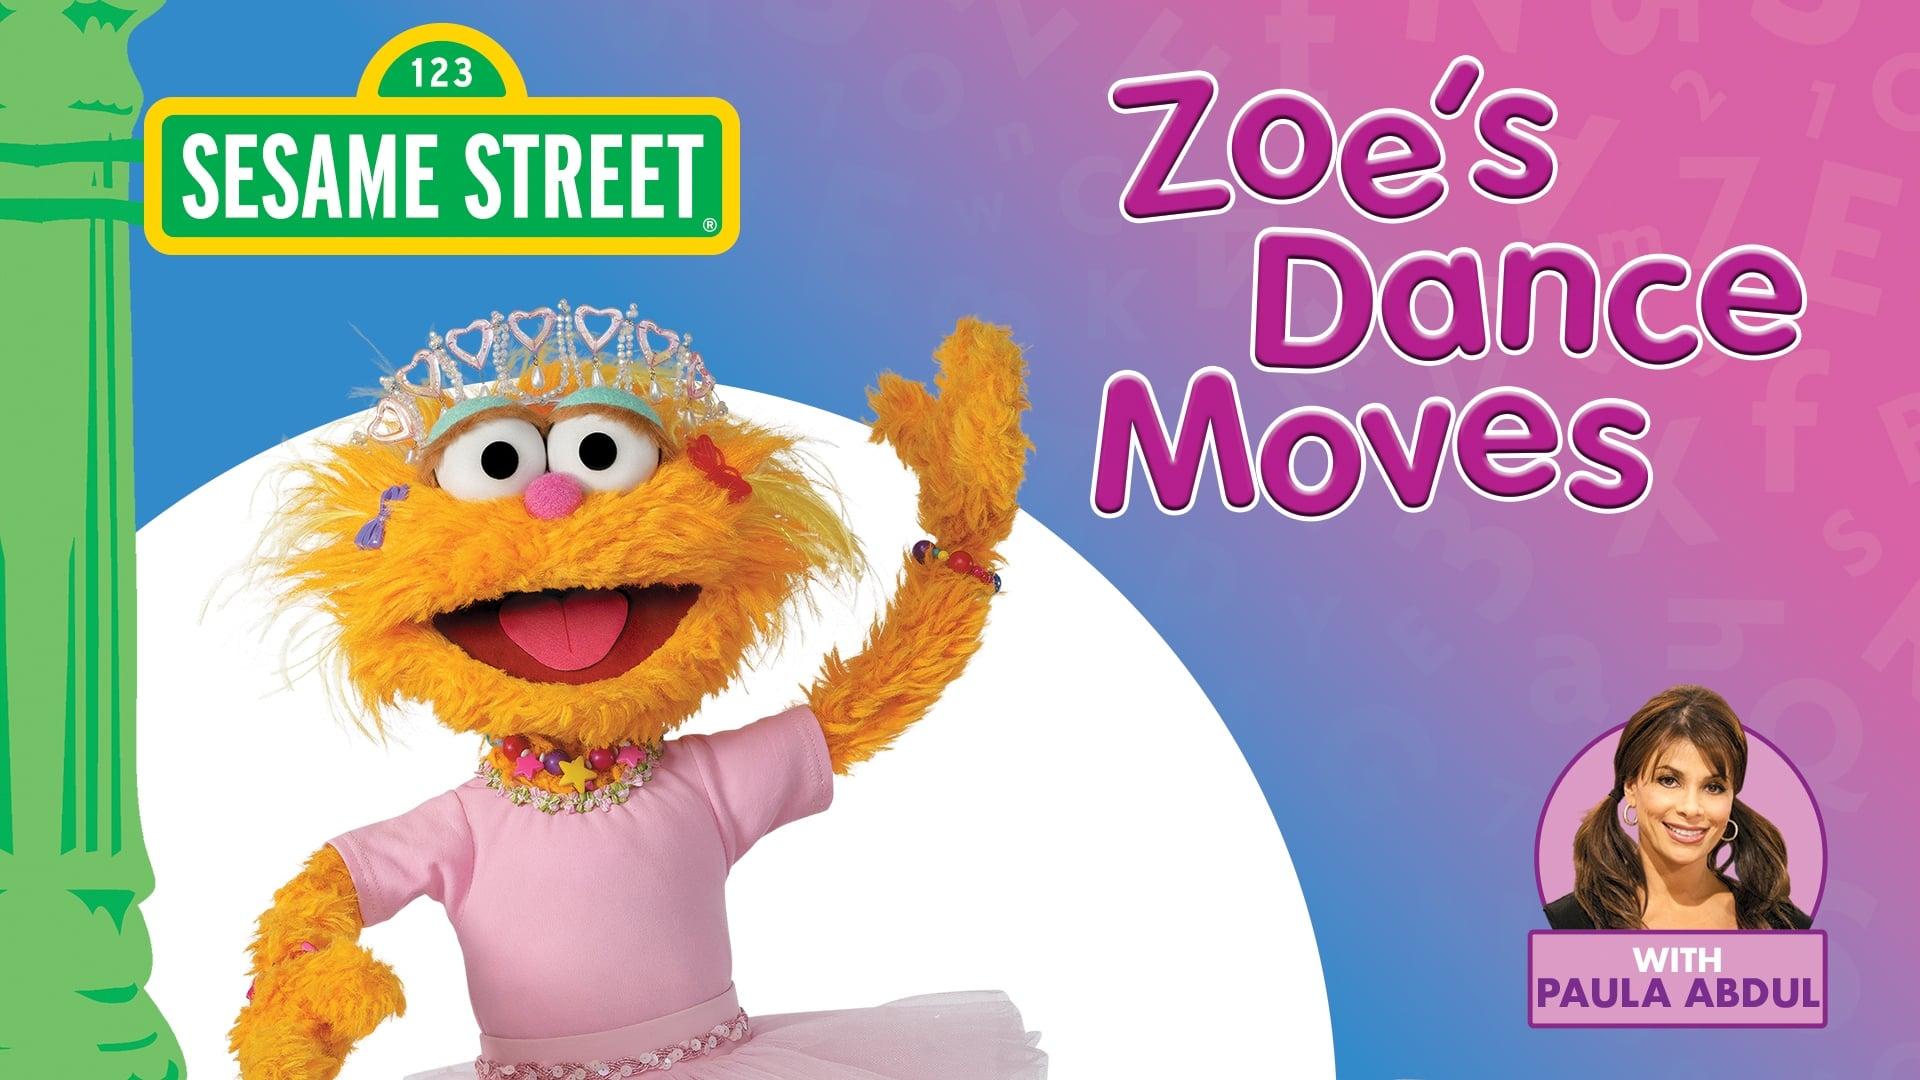 Sesame Street: Zoe's Dance Moves backdrop